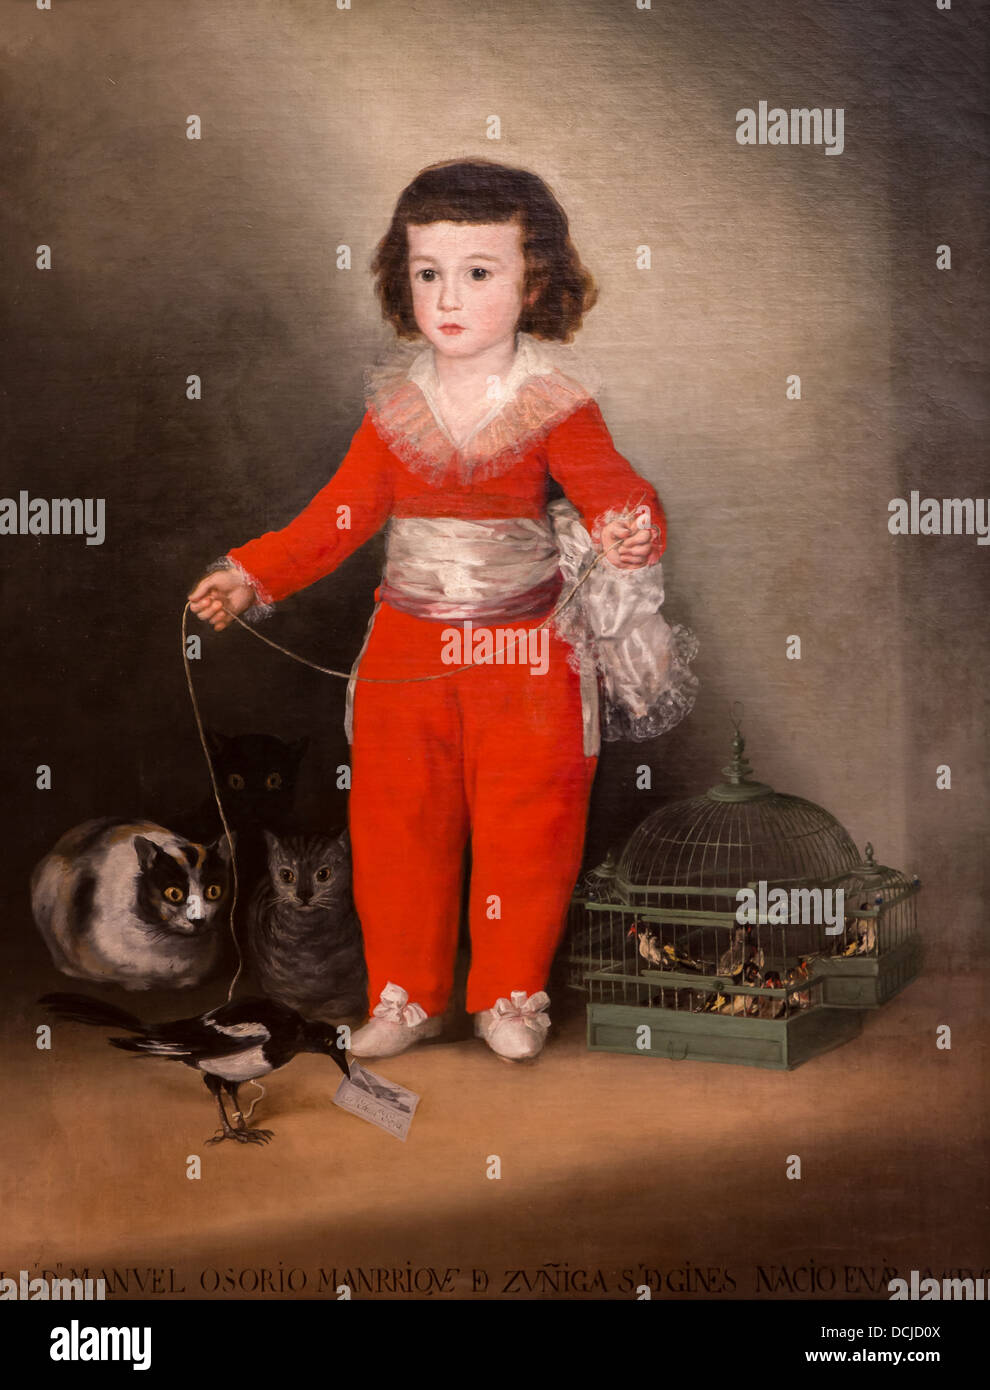 18th century  -  Manuel Osorto Manrique of Zuniga, 1787 - Goya Philippe Sauvan-Magnet / Active Museum Stock Photo